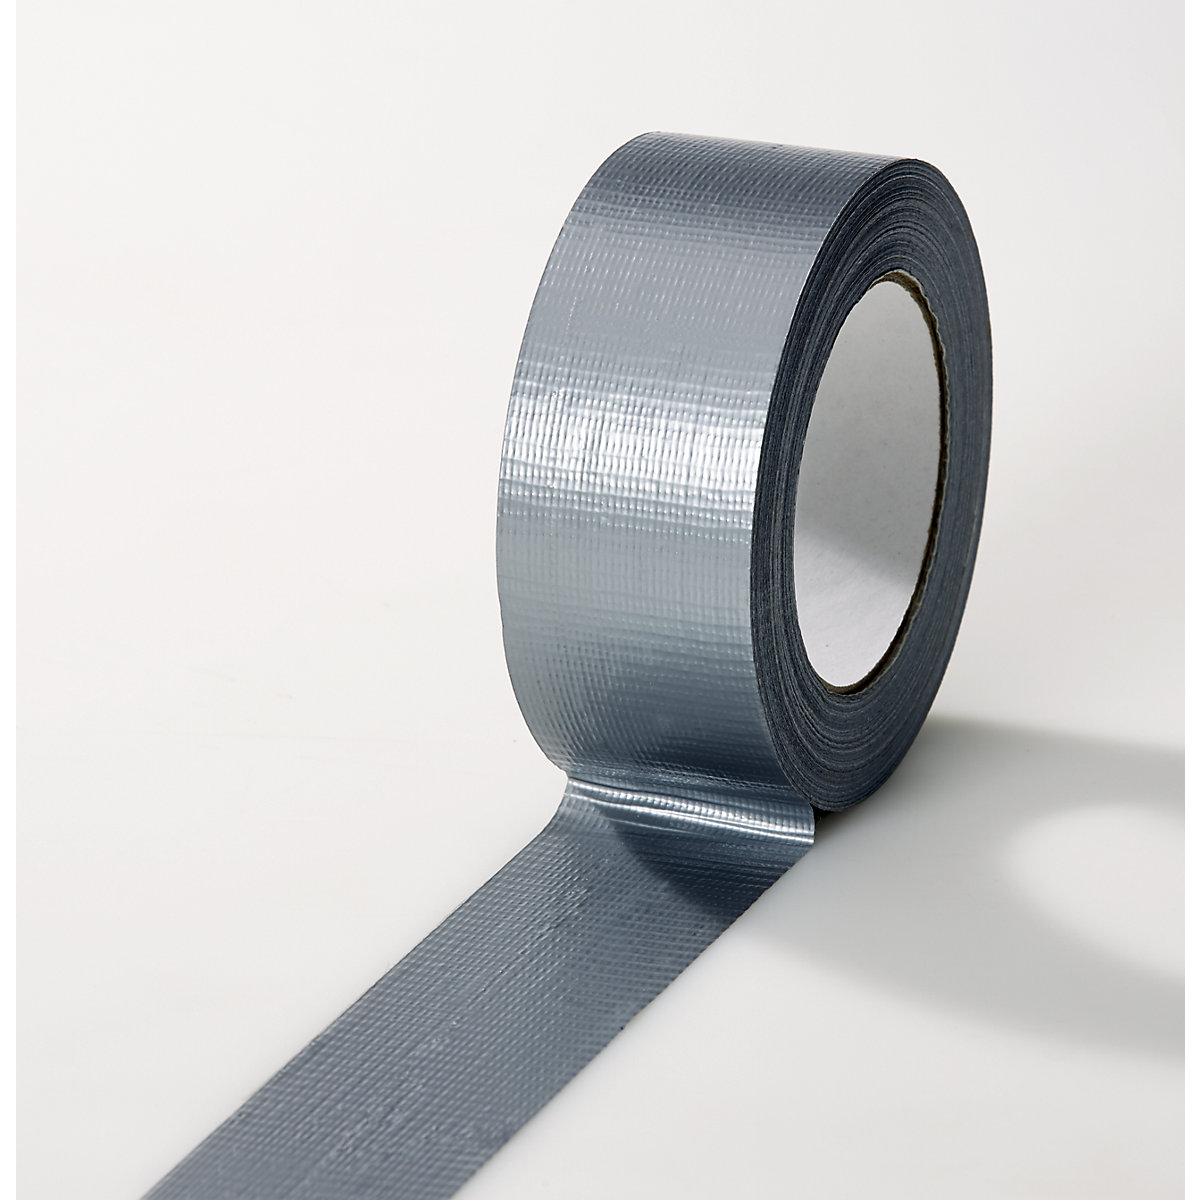 Tkaninová páska, v různých barvách, bal.j. 24 rolí, stříbrná, šířka pásky 38 mm-11